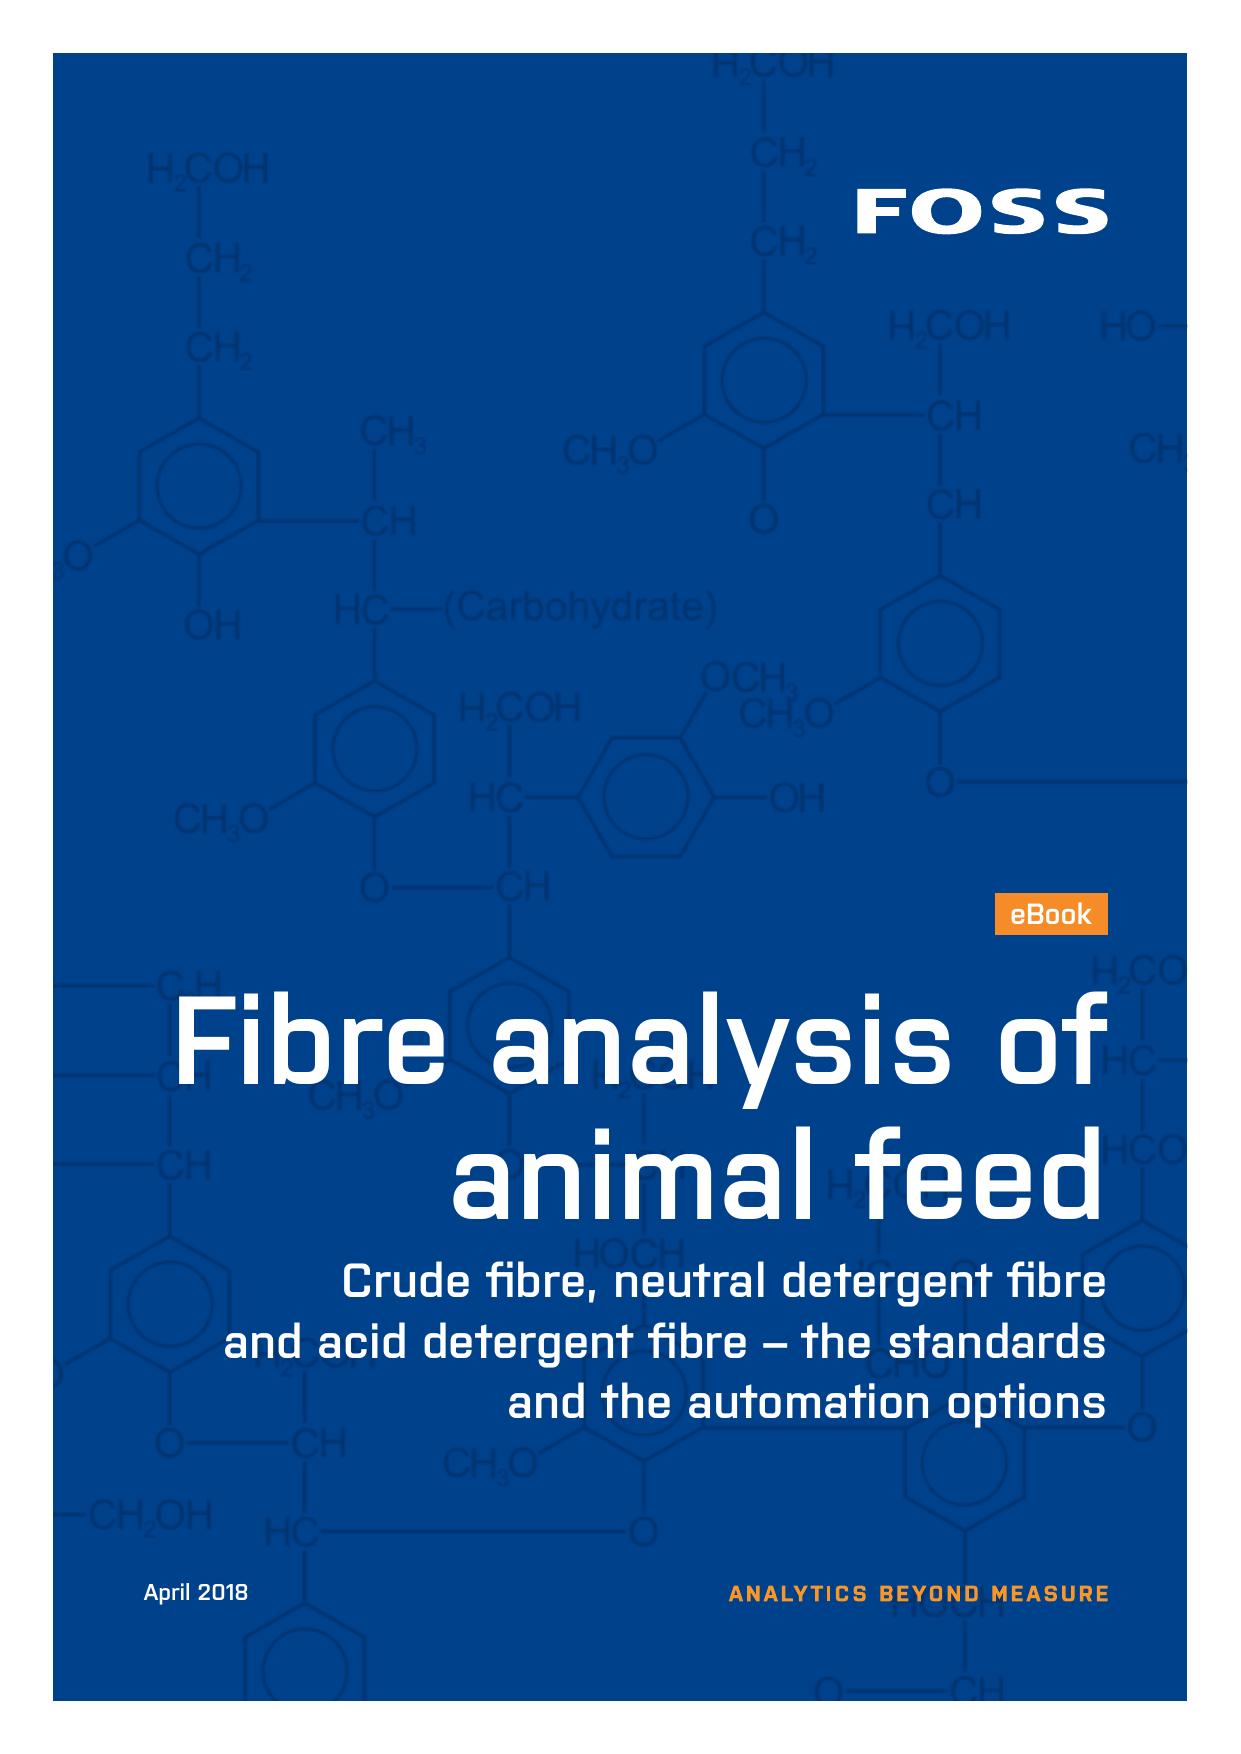 Fibre analysis of animal feed 2018